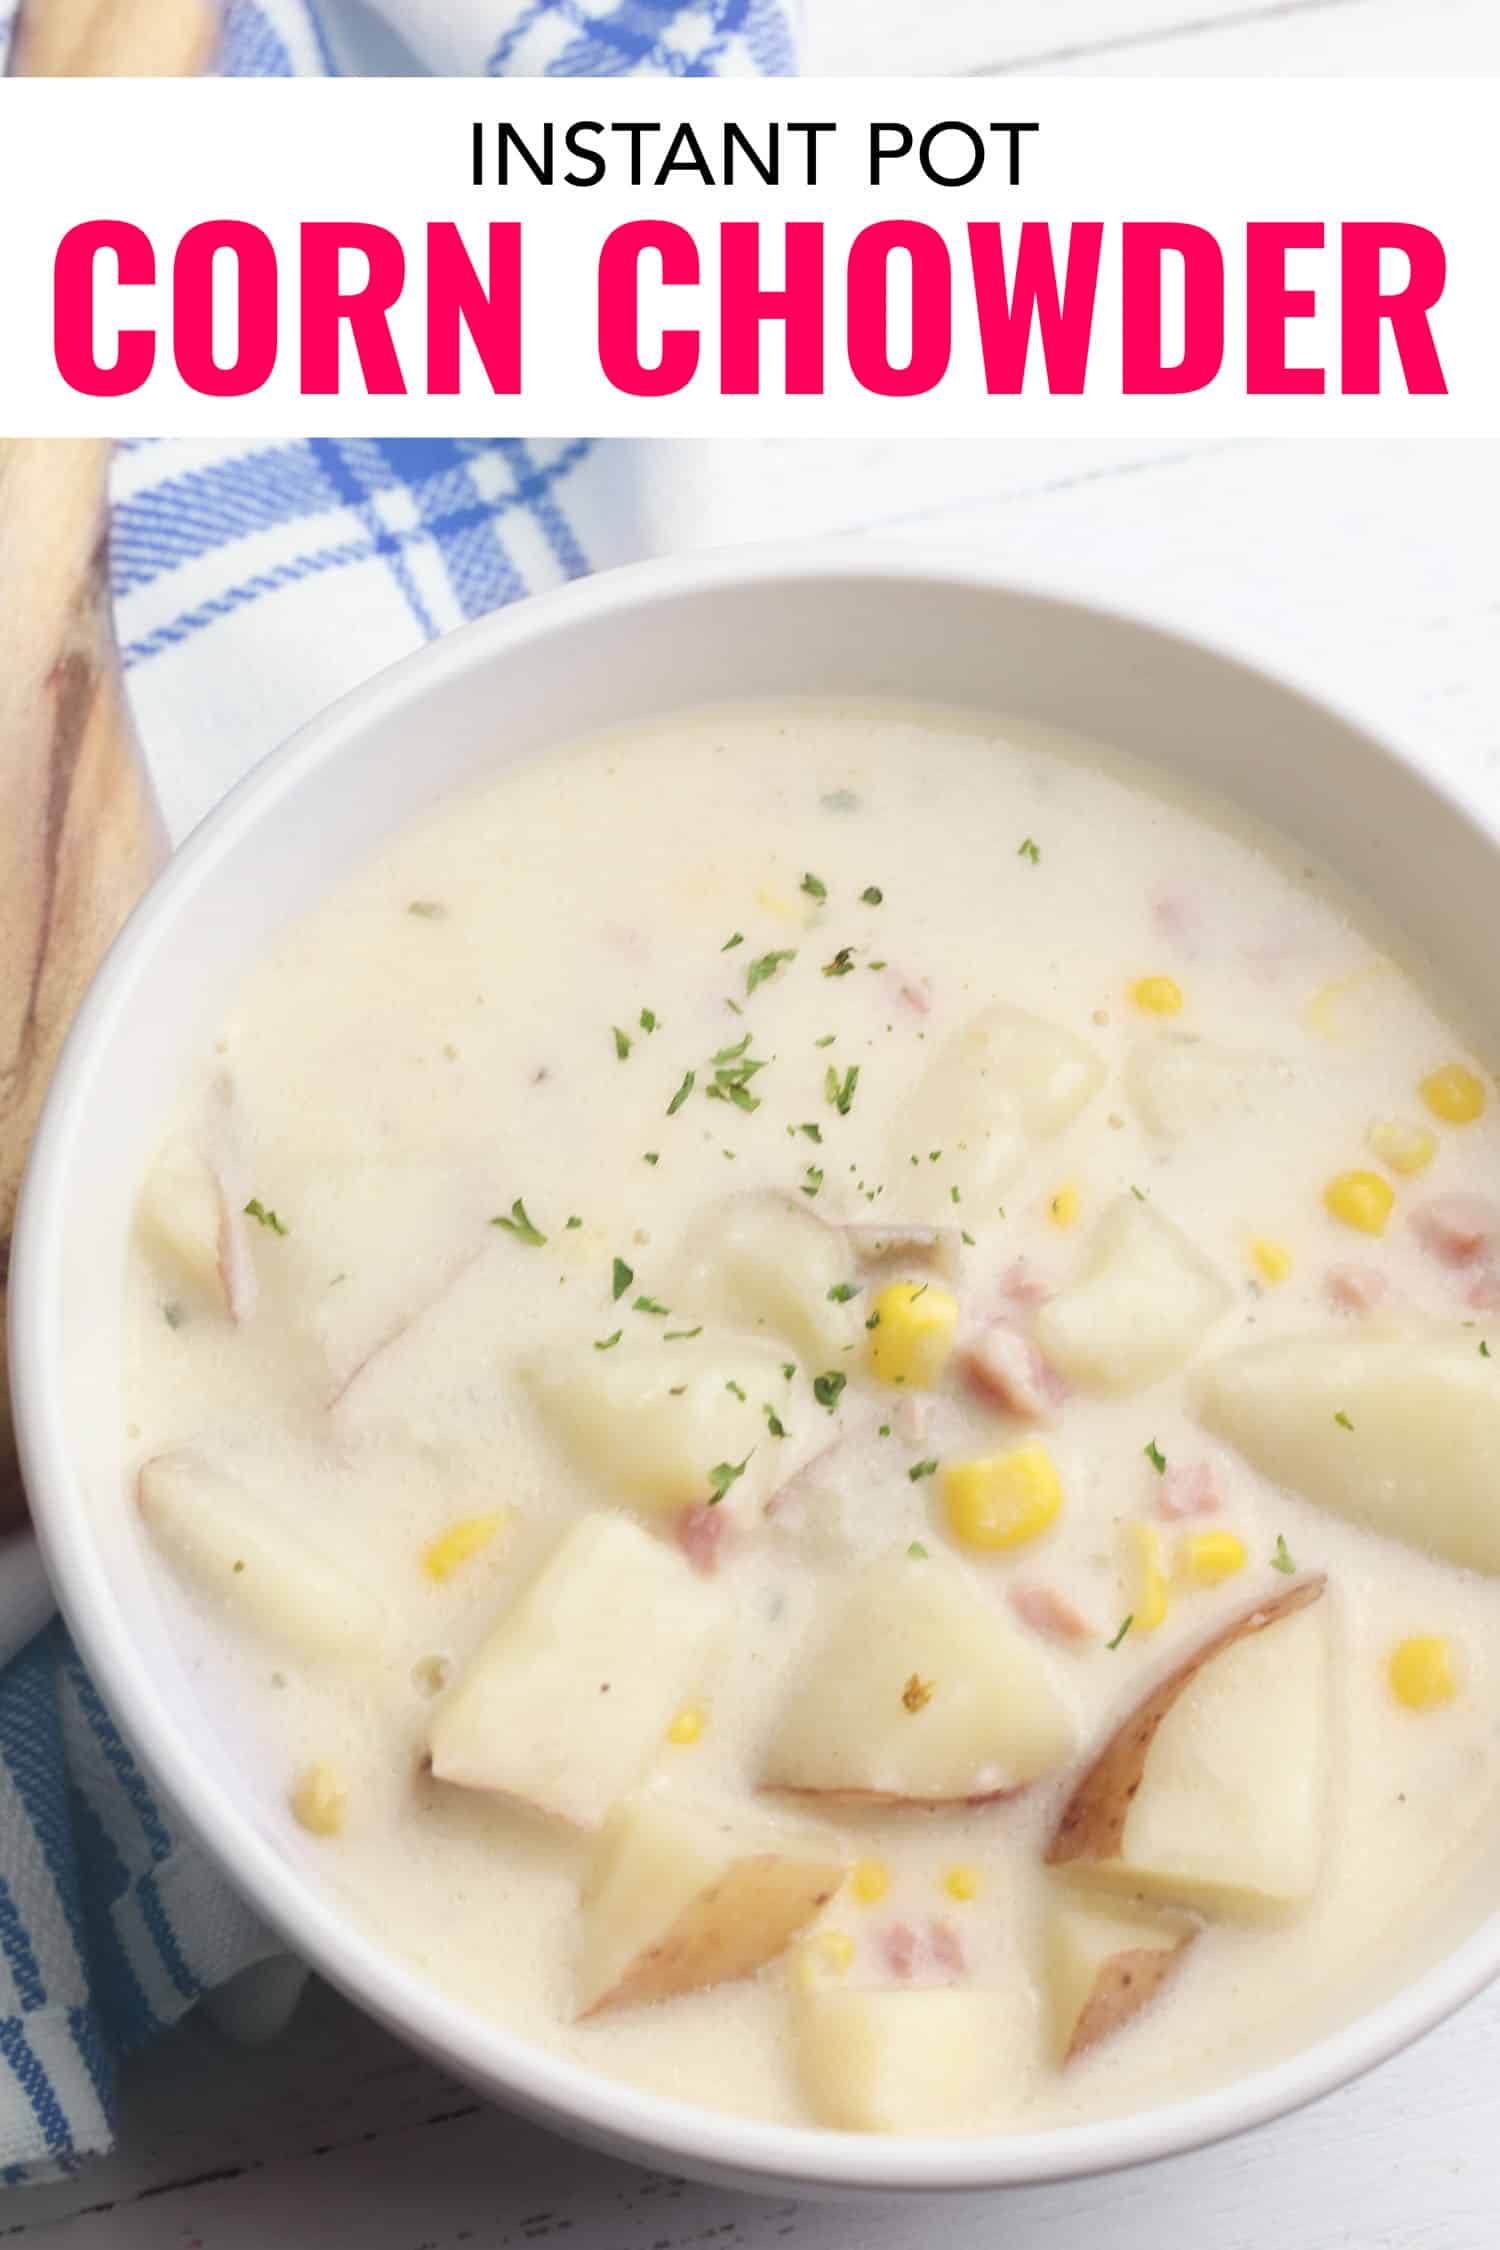 Corn chowder in a white bowl